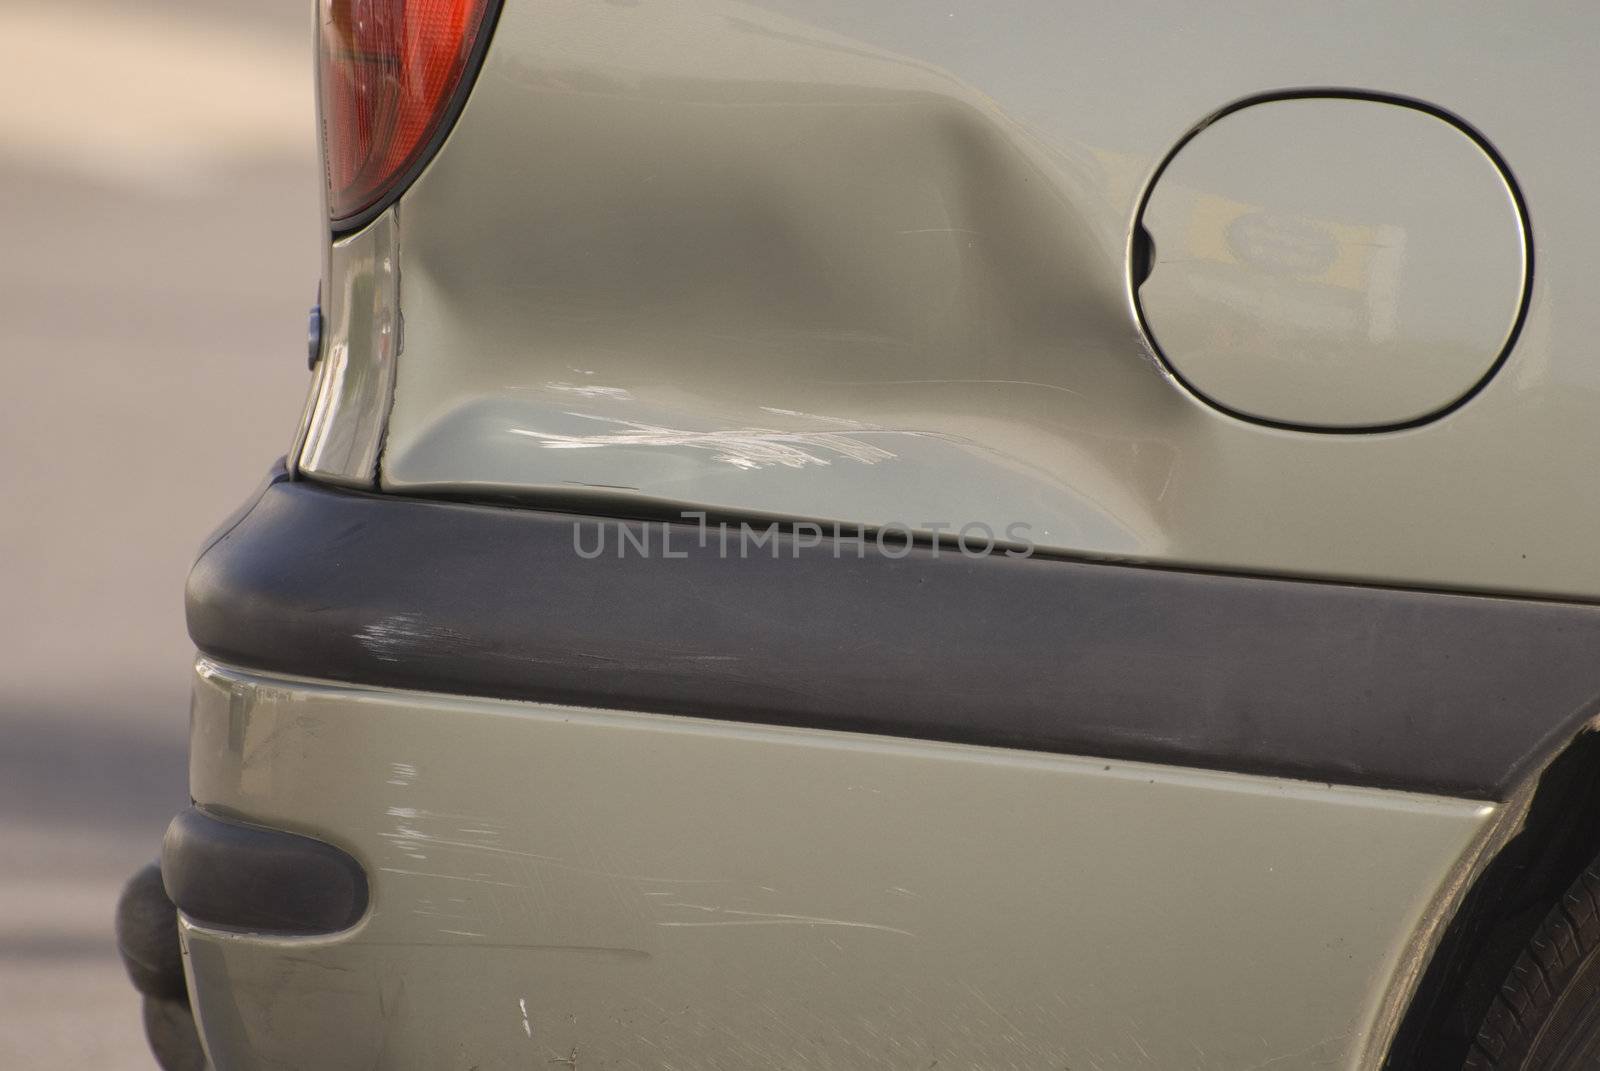 A dent in the right rear quarter of a european car